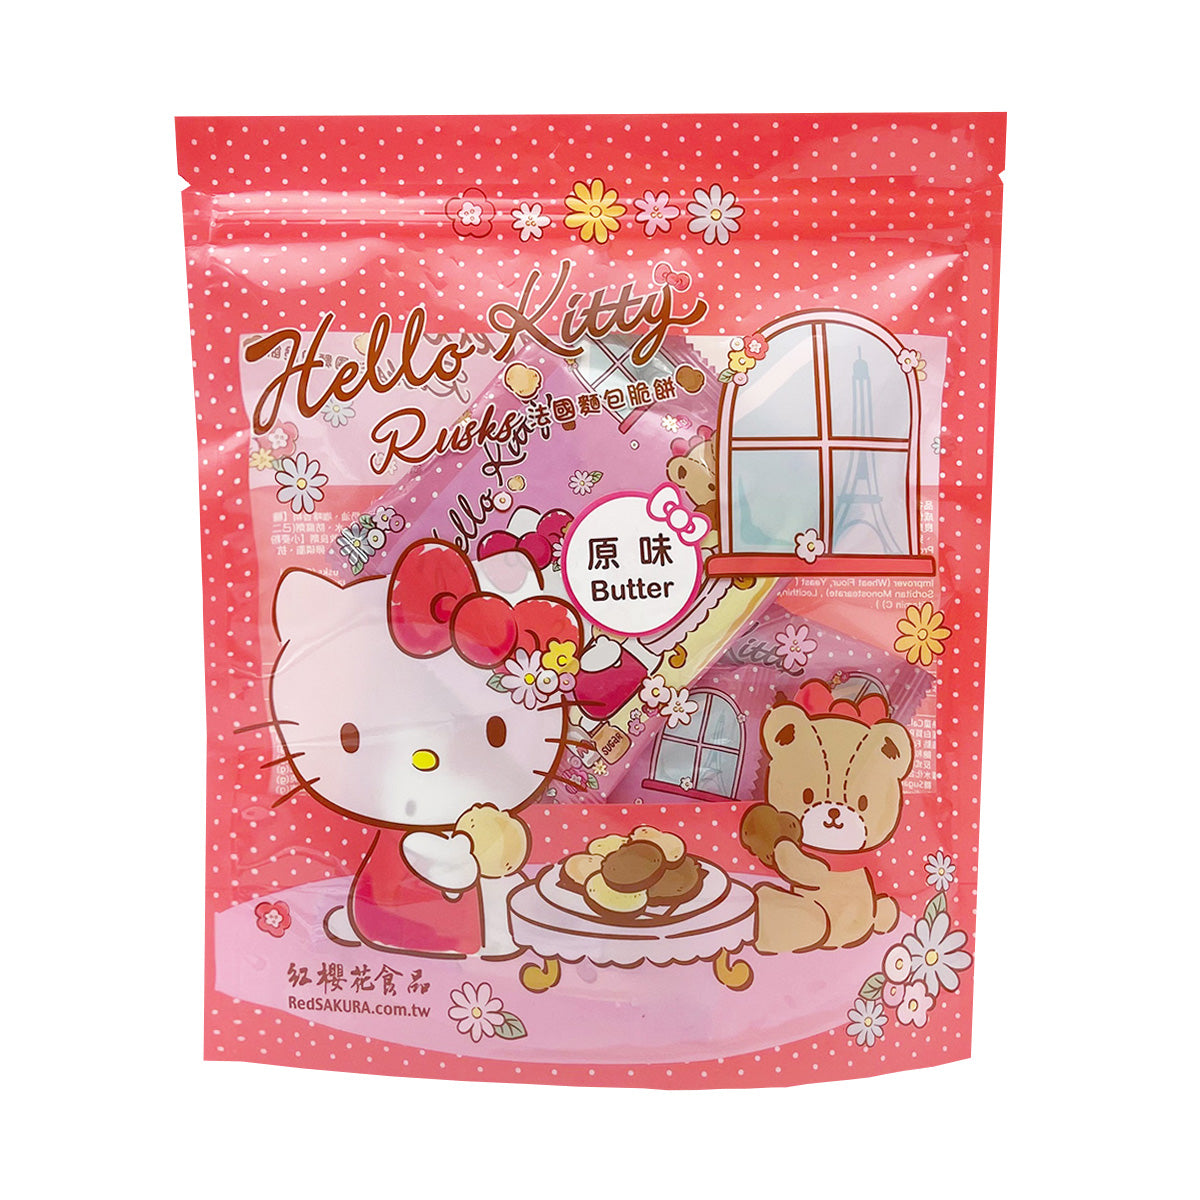 【RED SAKURA】Hello Kitty Rusks (Original) 100g 8pcs